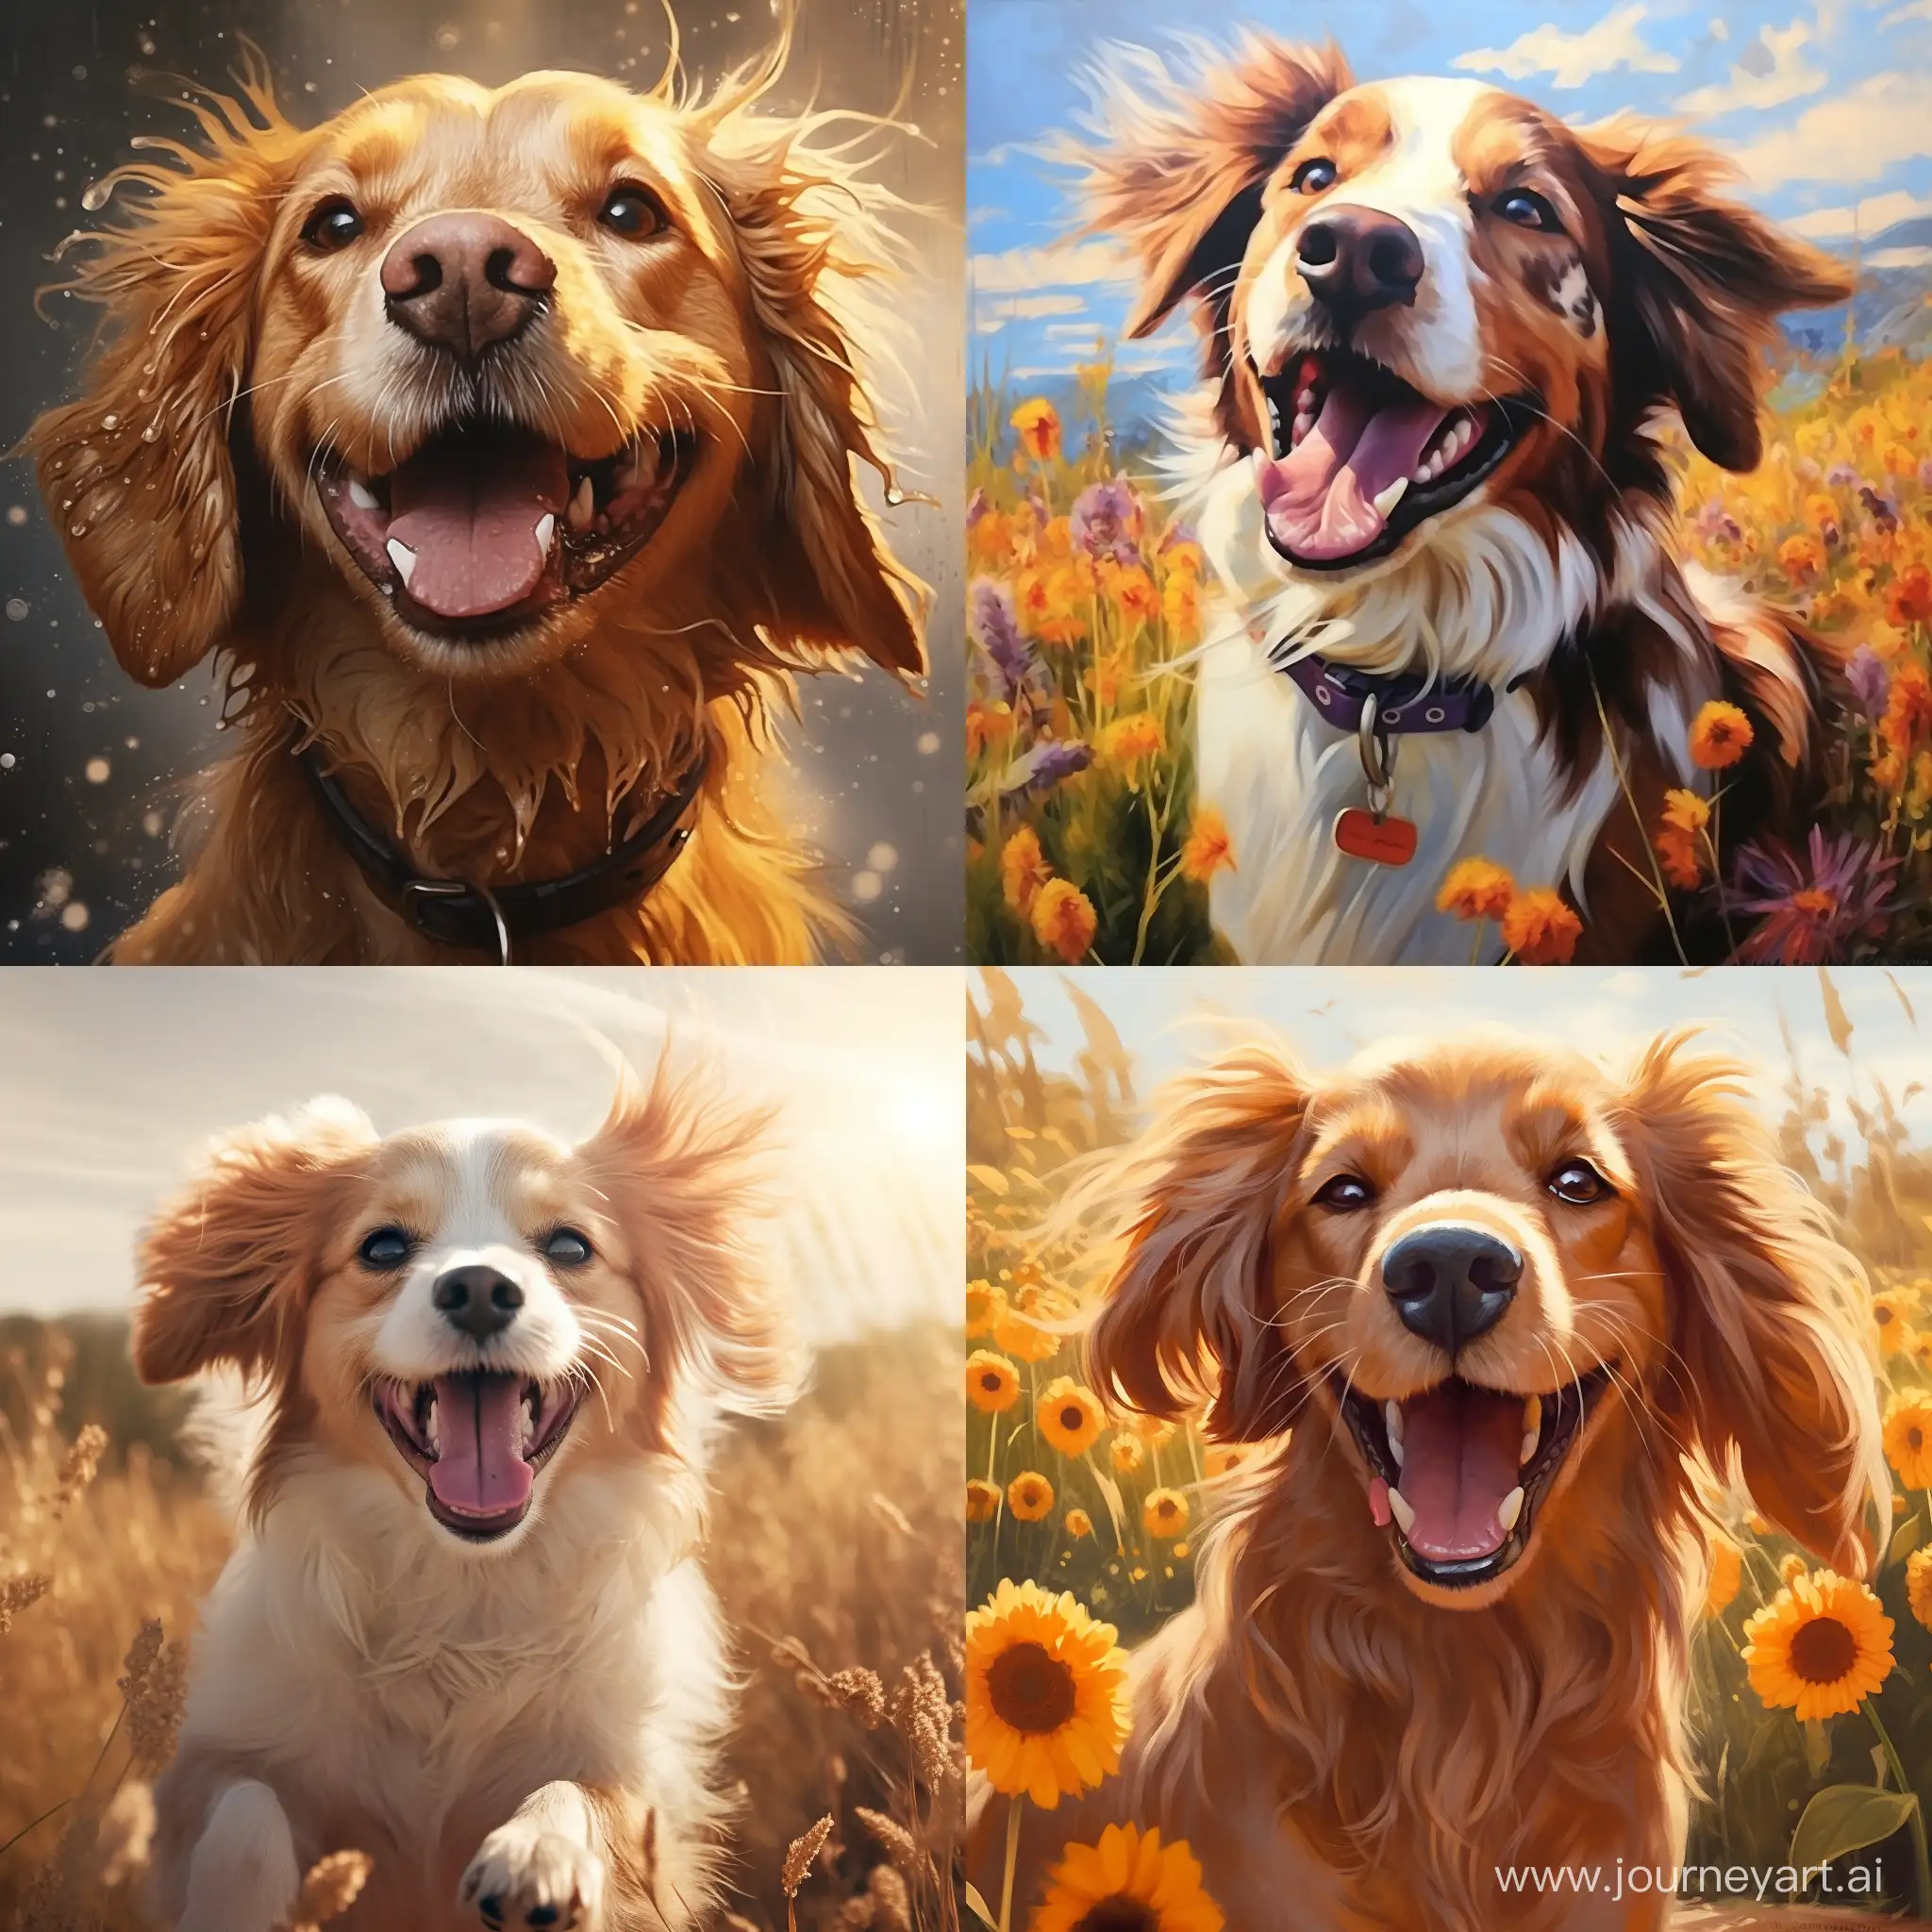 Joyful-Canine-Delight-Playful-Dog-in-a-Square-Frame